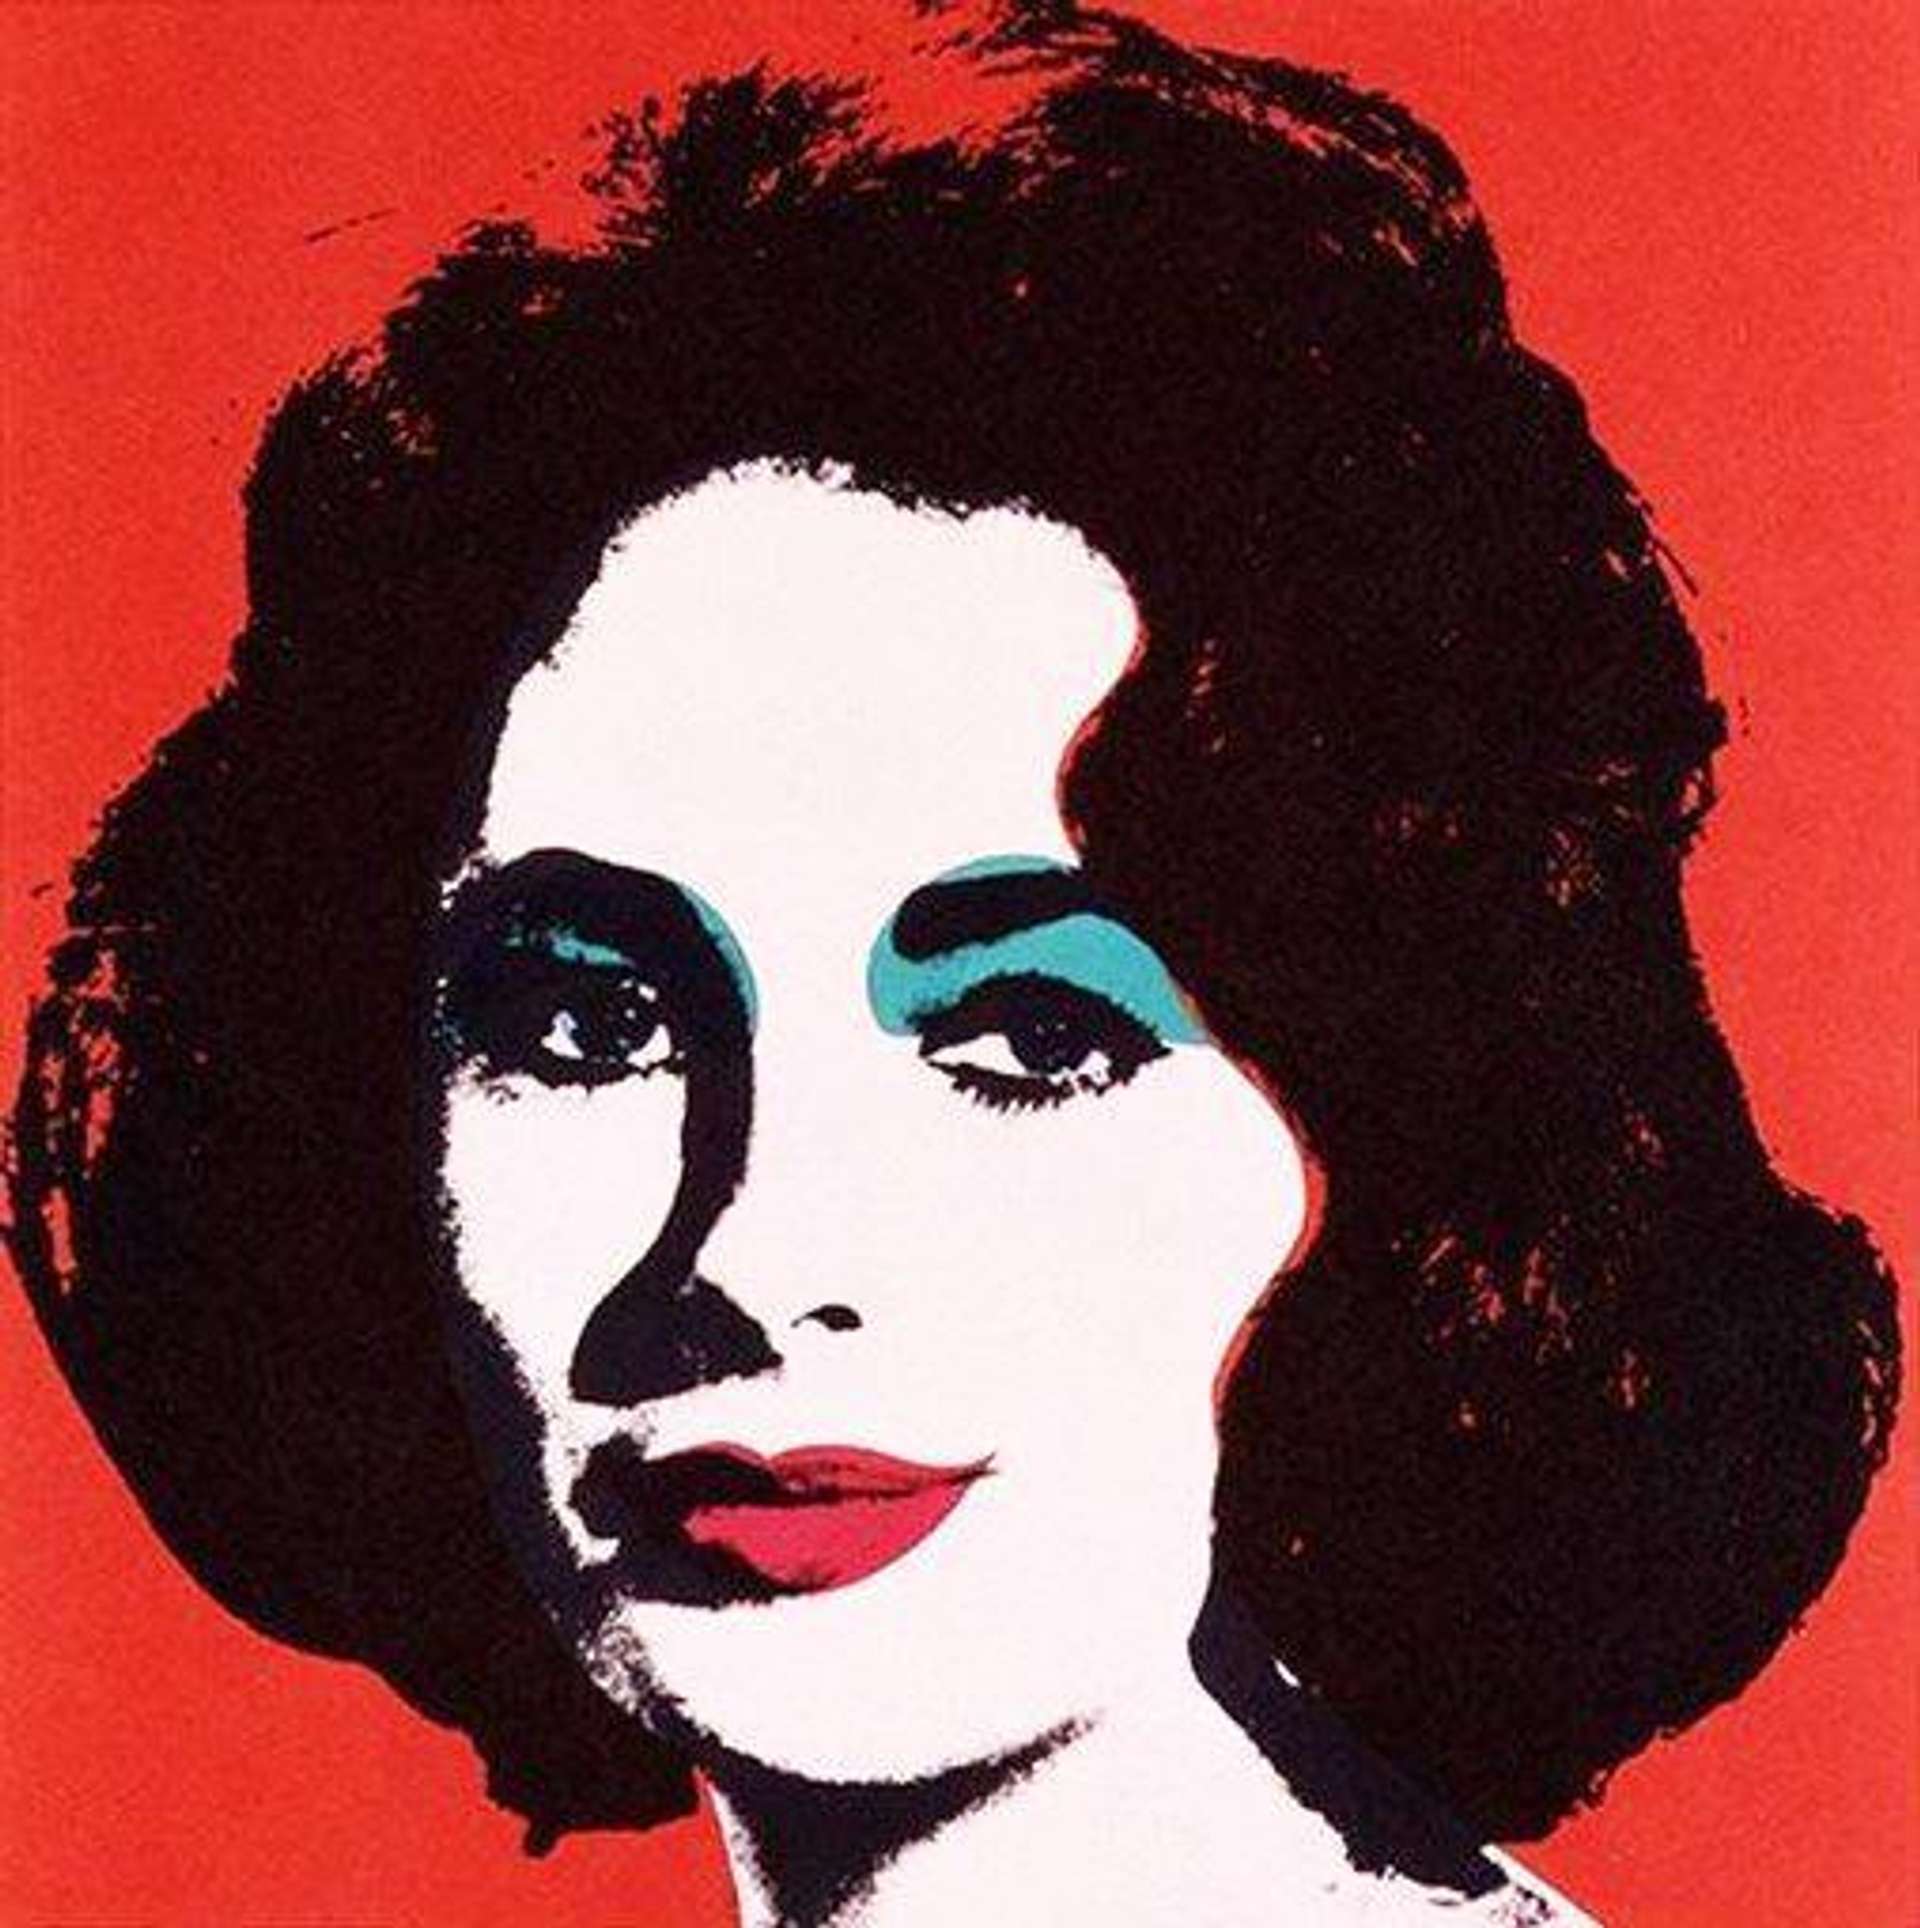 Liz - Signed Print by Andy Warhol 1964 - MyArtBroker